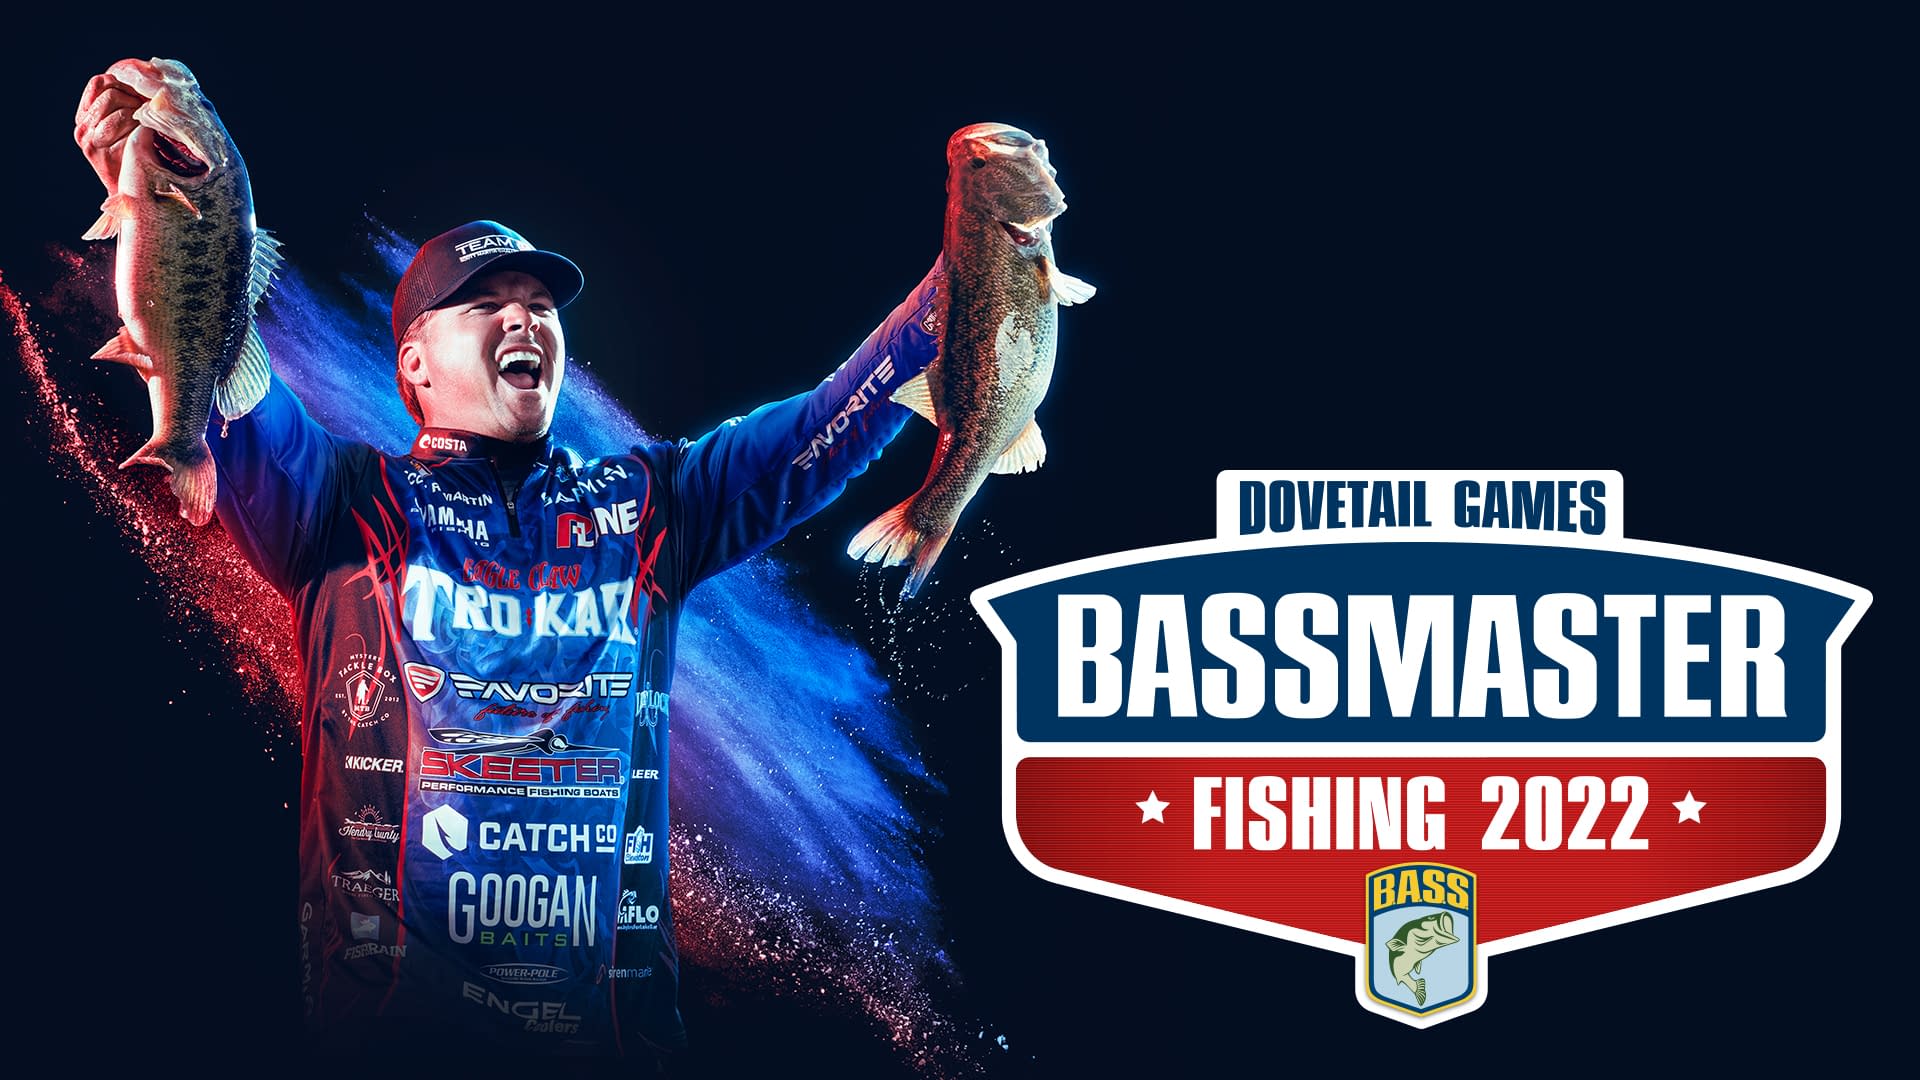 Bassmaster Fishing 2022 Shows Off Multiple New Levels